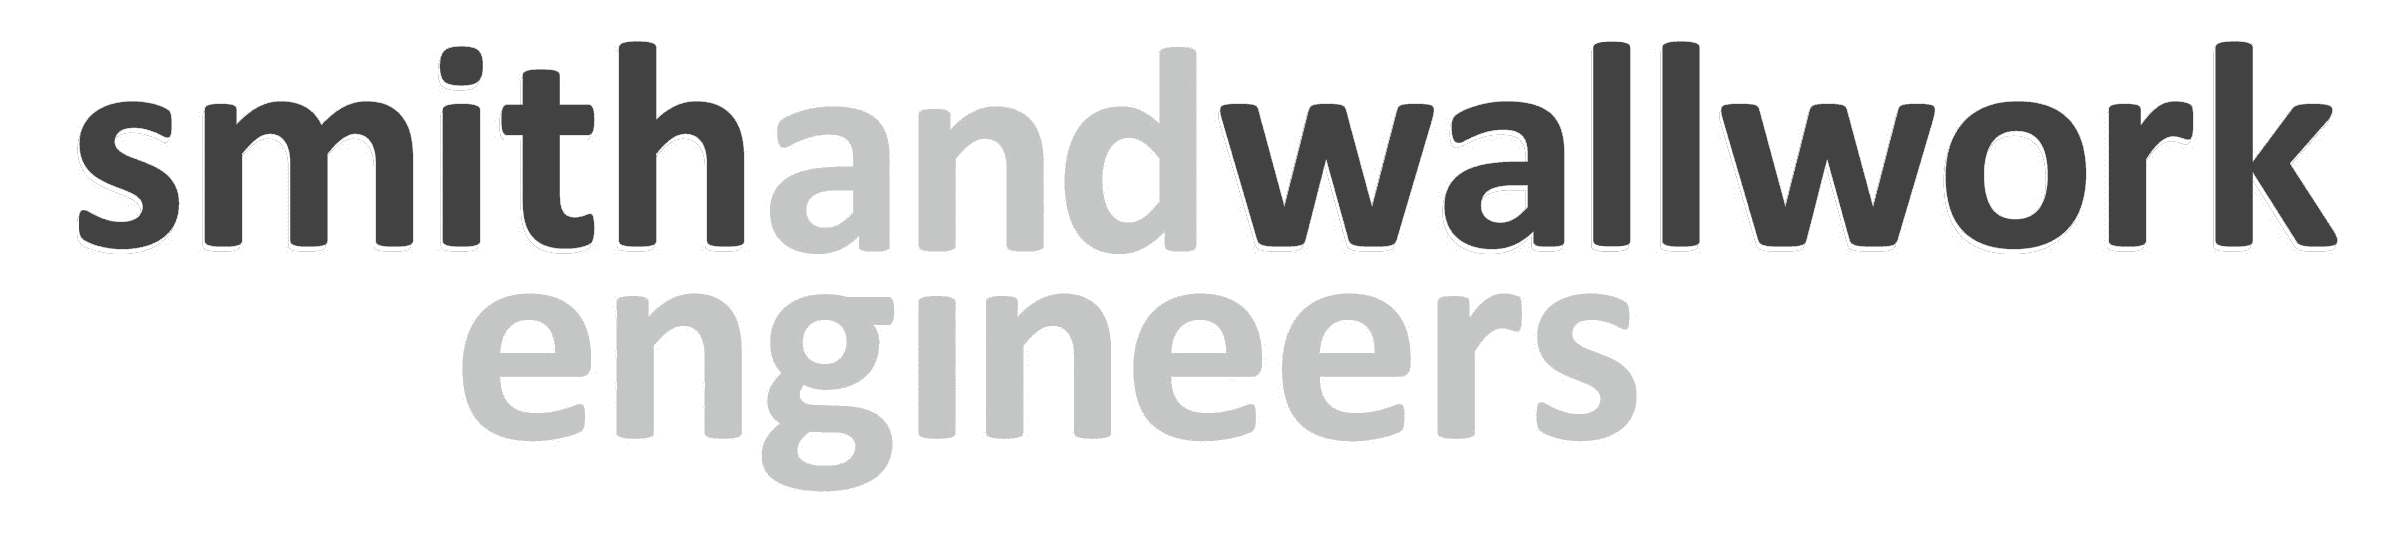 smithandwallworkengineers logo